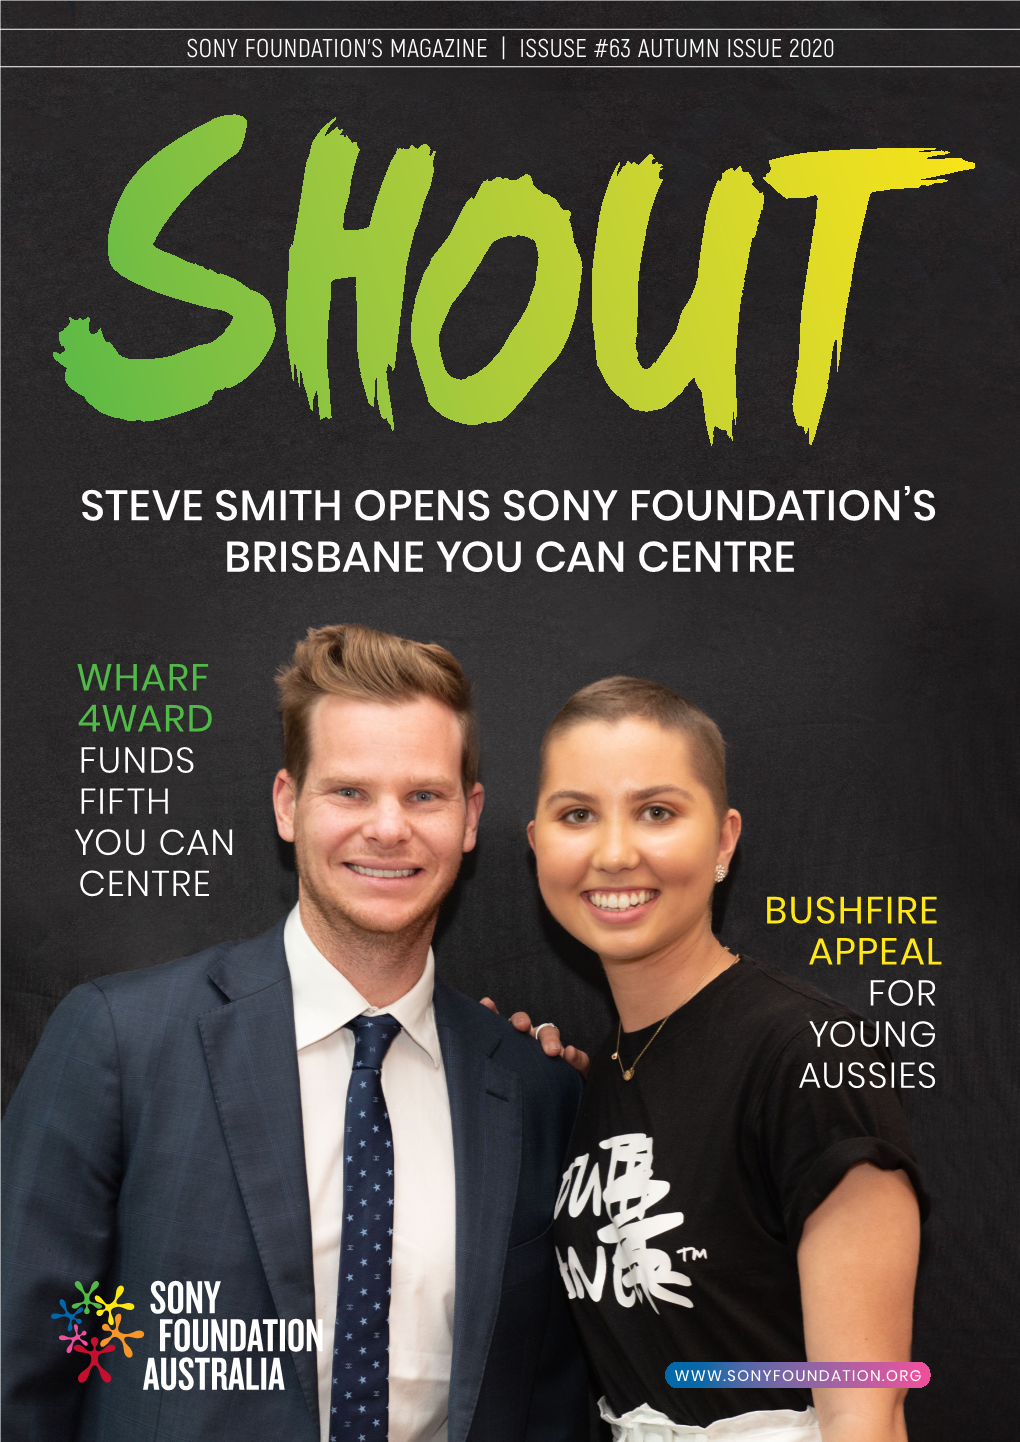 Steve Smith Opens Sony Foundation's Brisbane You